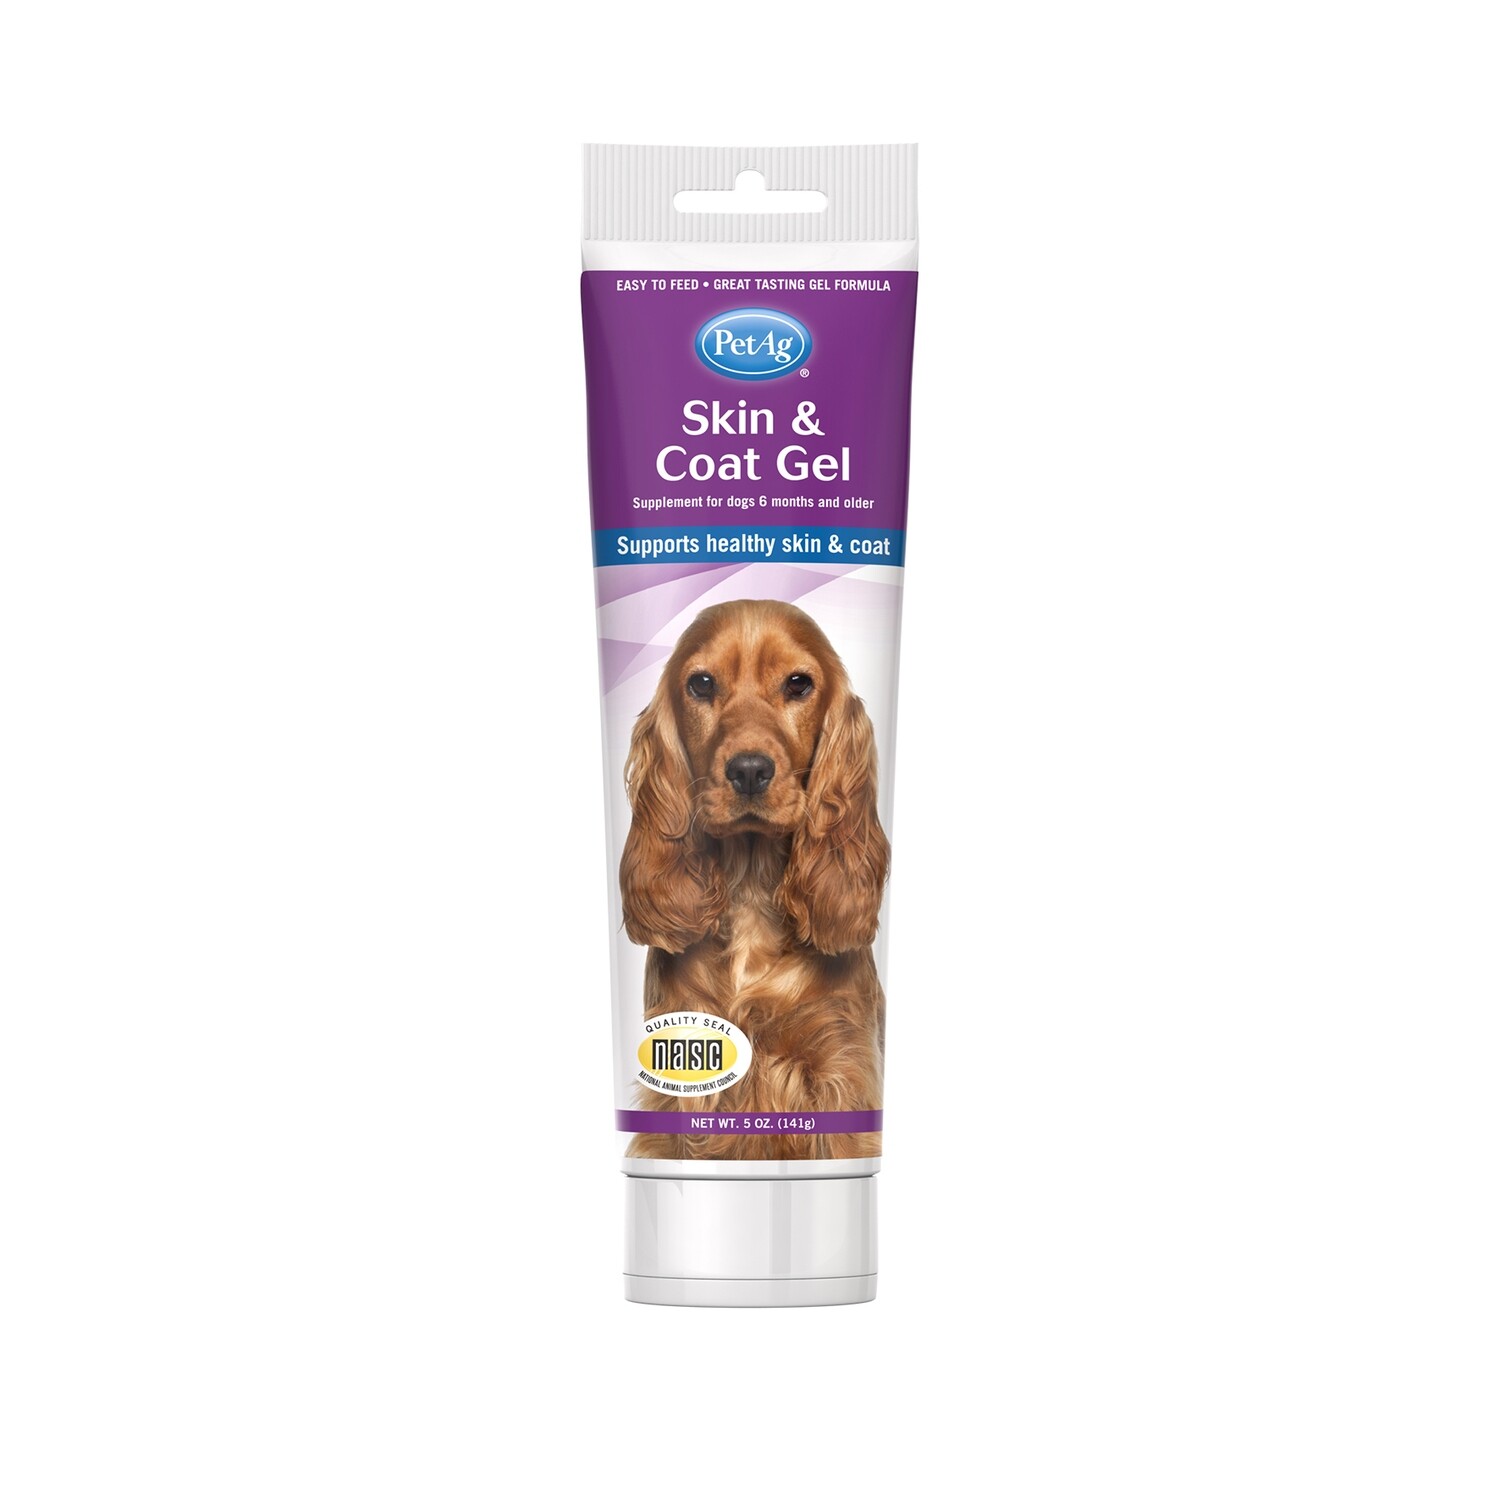 PetAg DOG SKIN & COAT GEL - 犬用美毛护肤营养膏